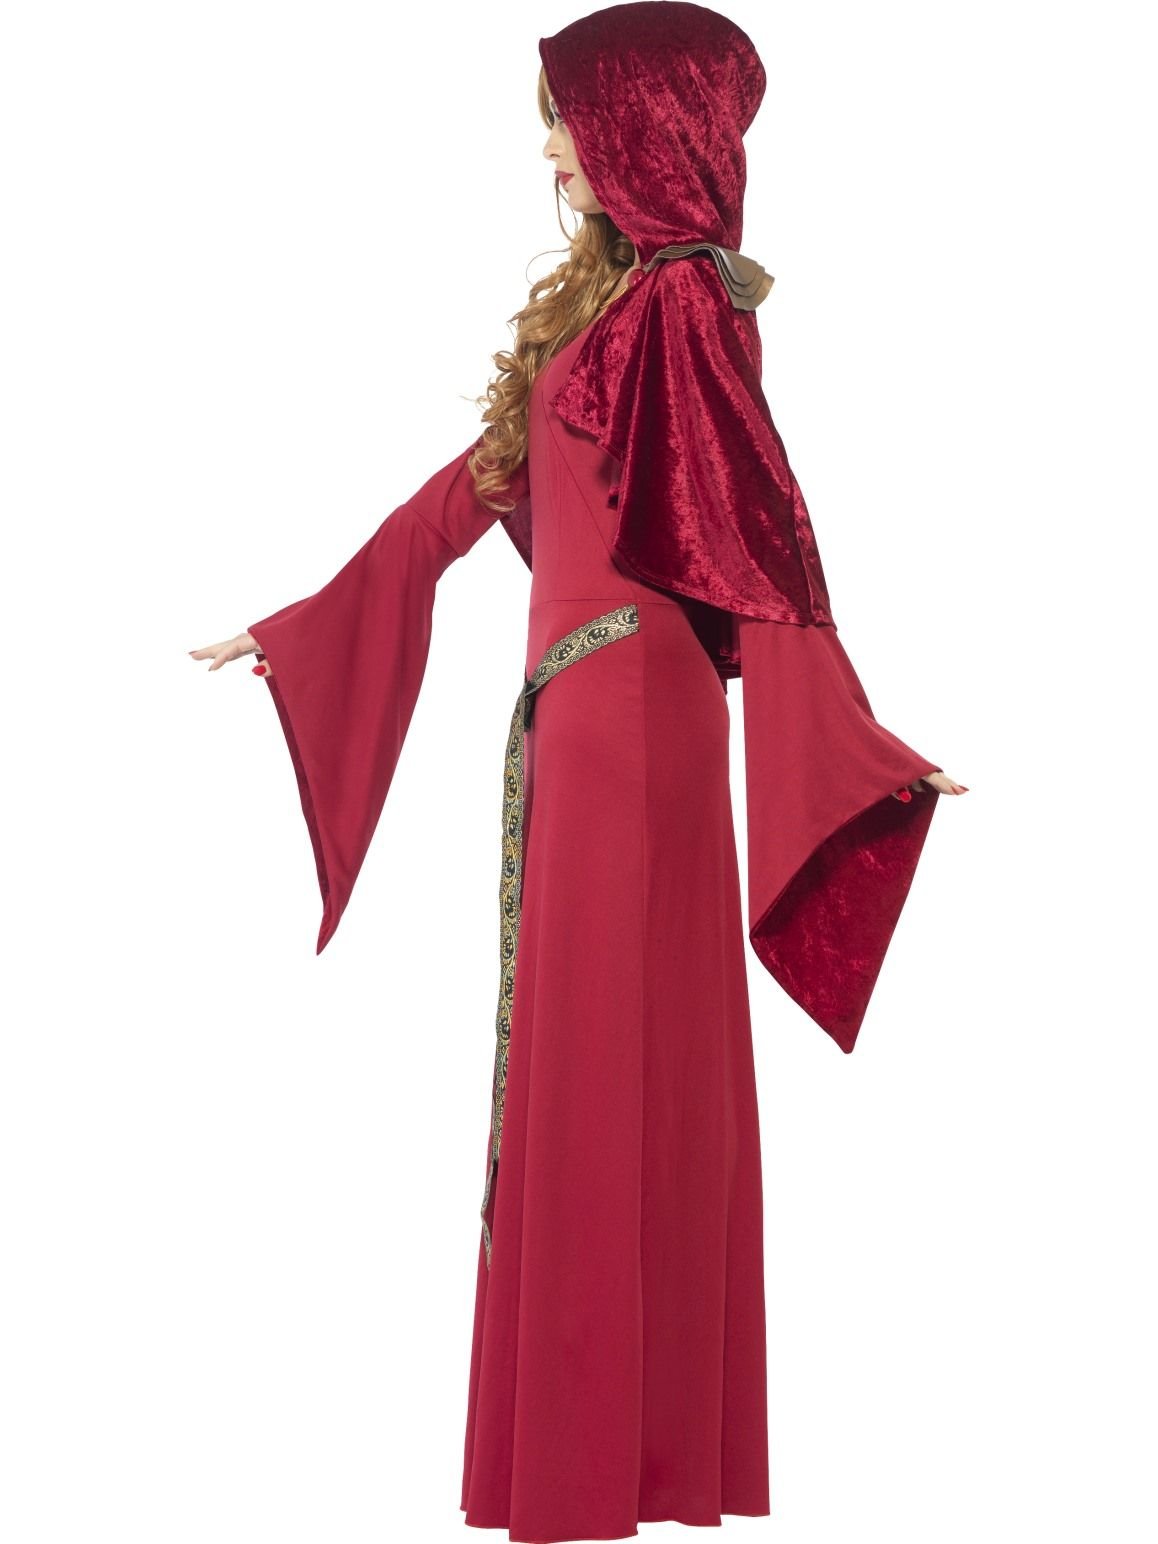 Costume Adult High Priestess Medieval Princess